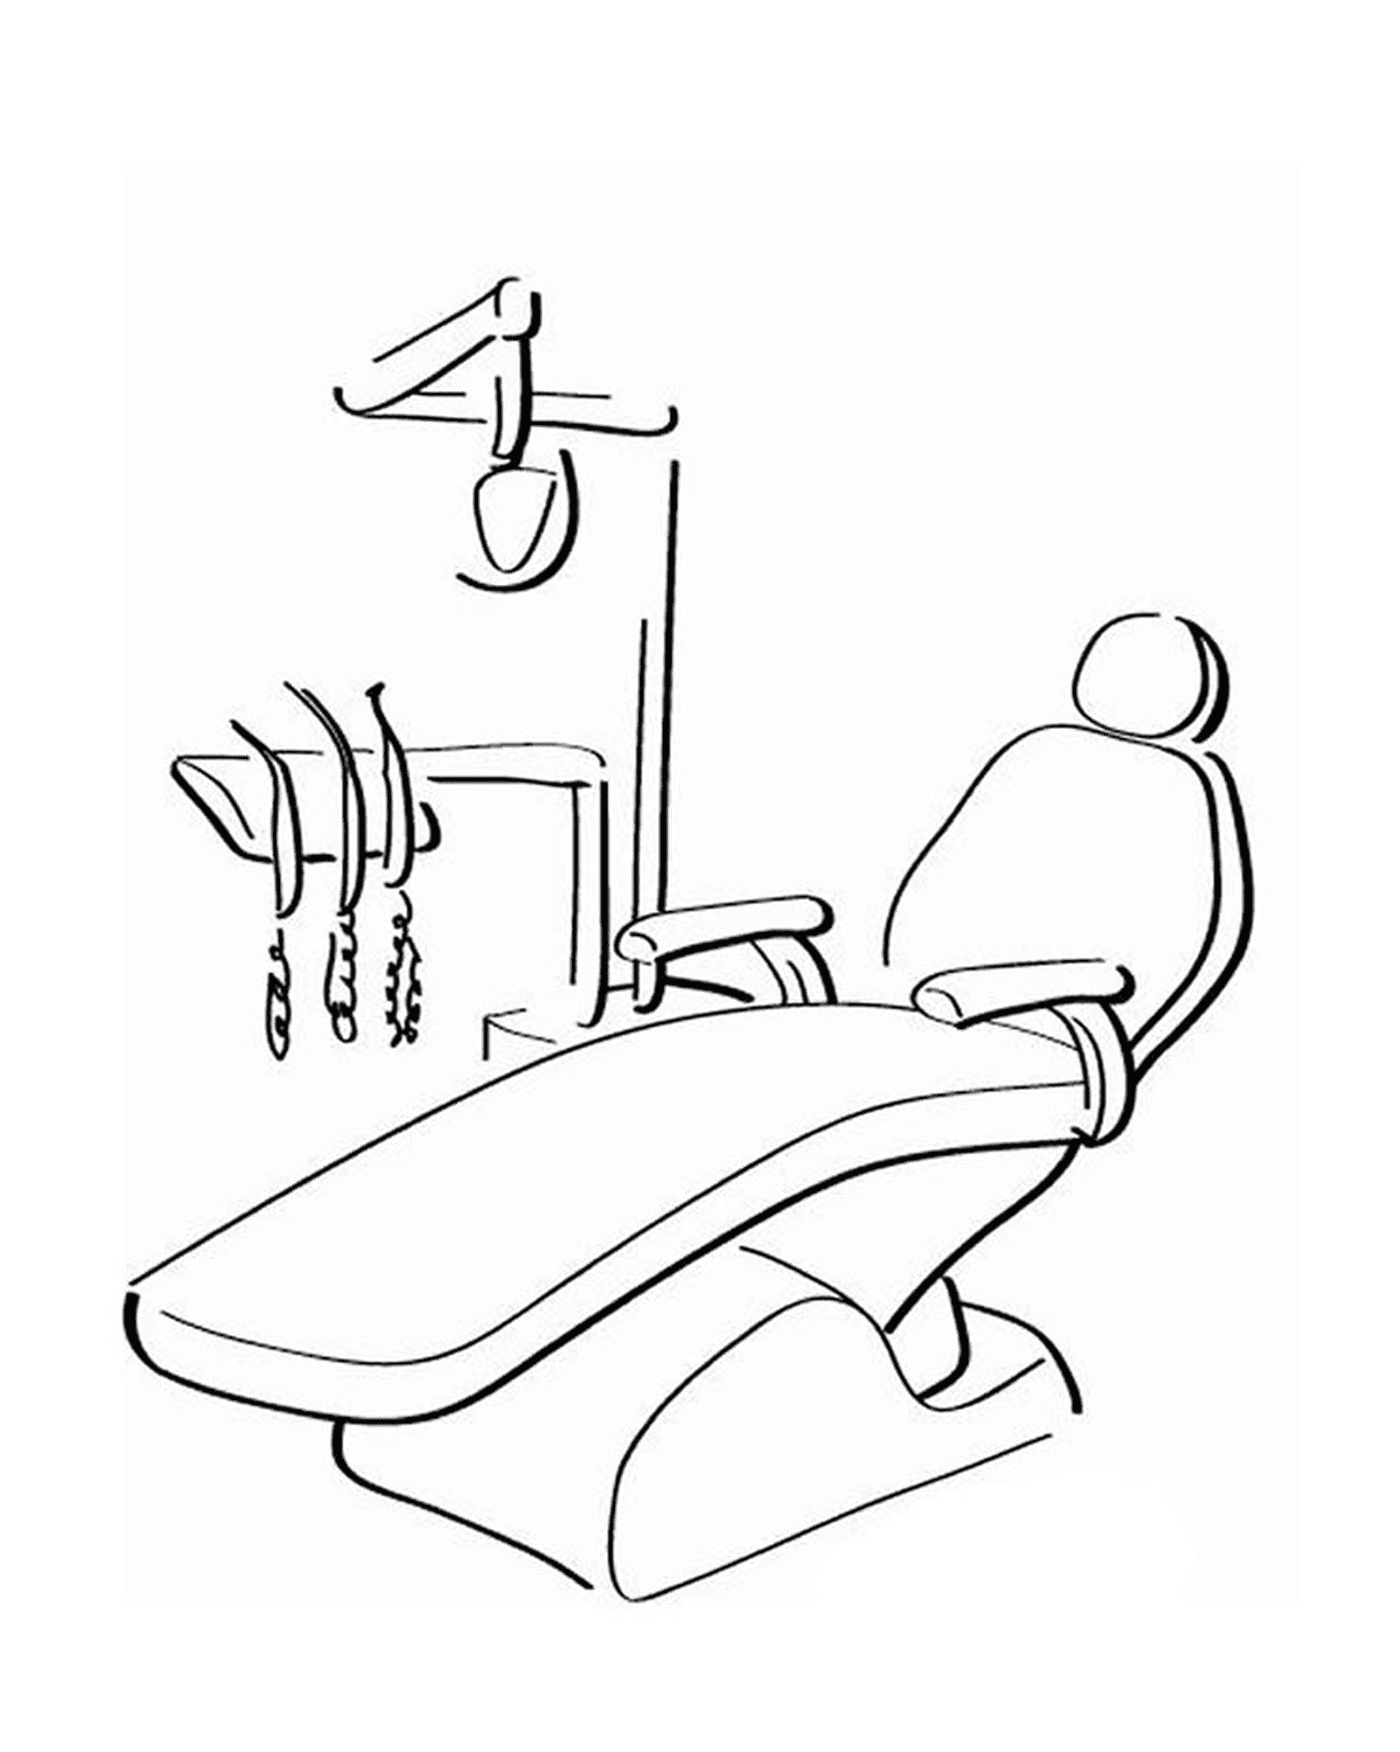  Офис стоматолога с инструментами 